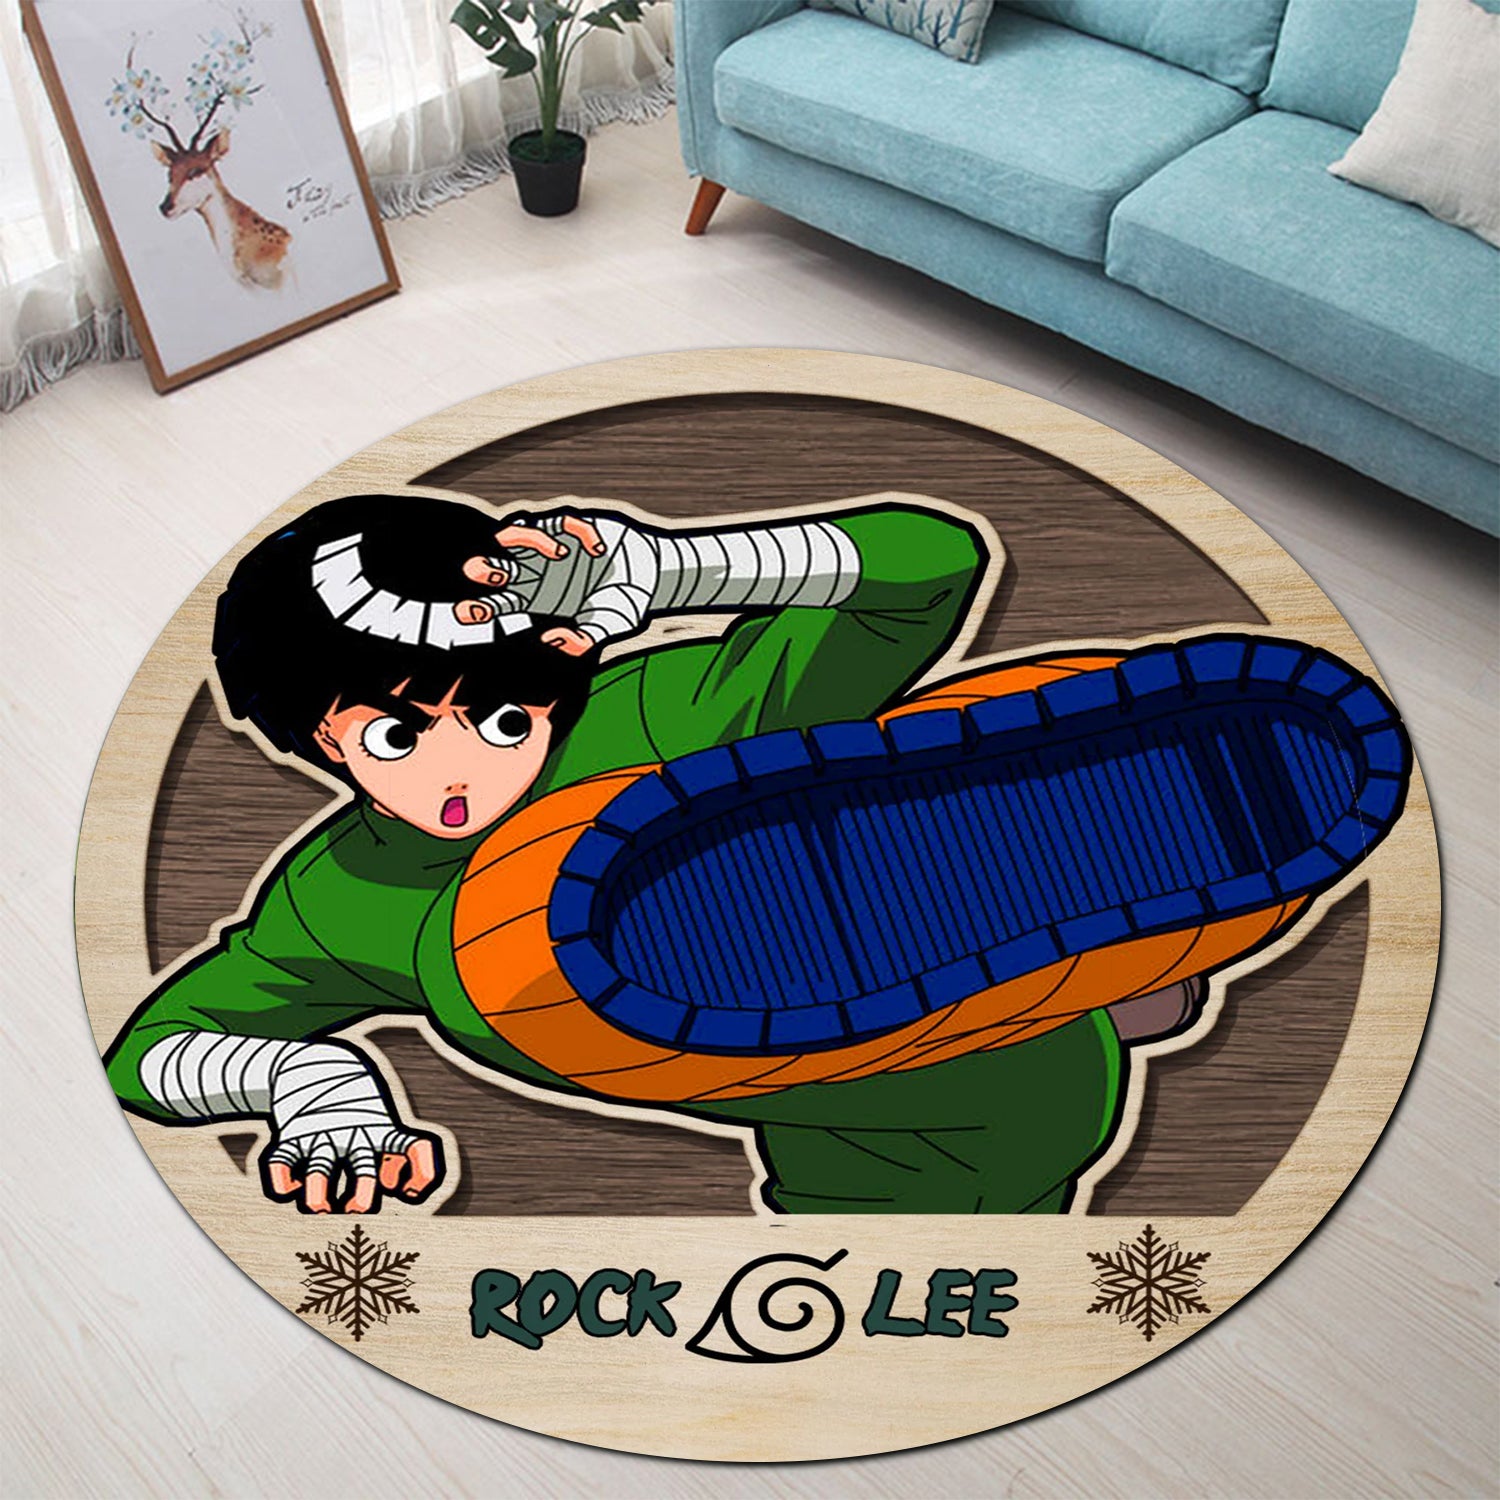 Naruto-Rock Lee Round Carpet Rug Bedroom Livingroom Home Decor Nearkii